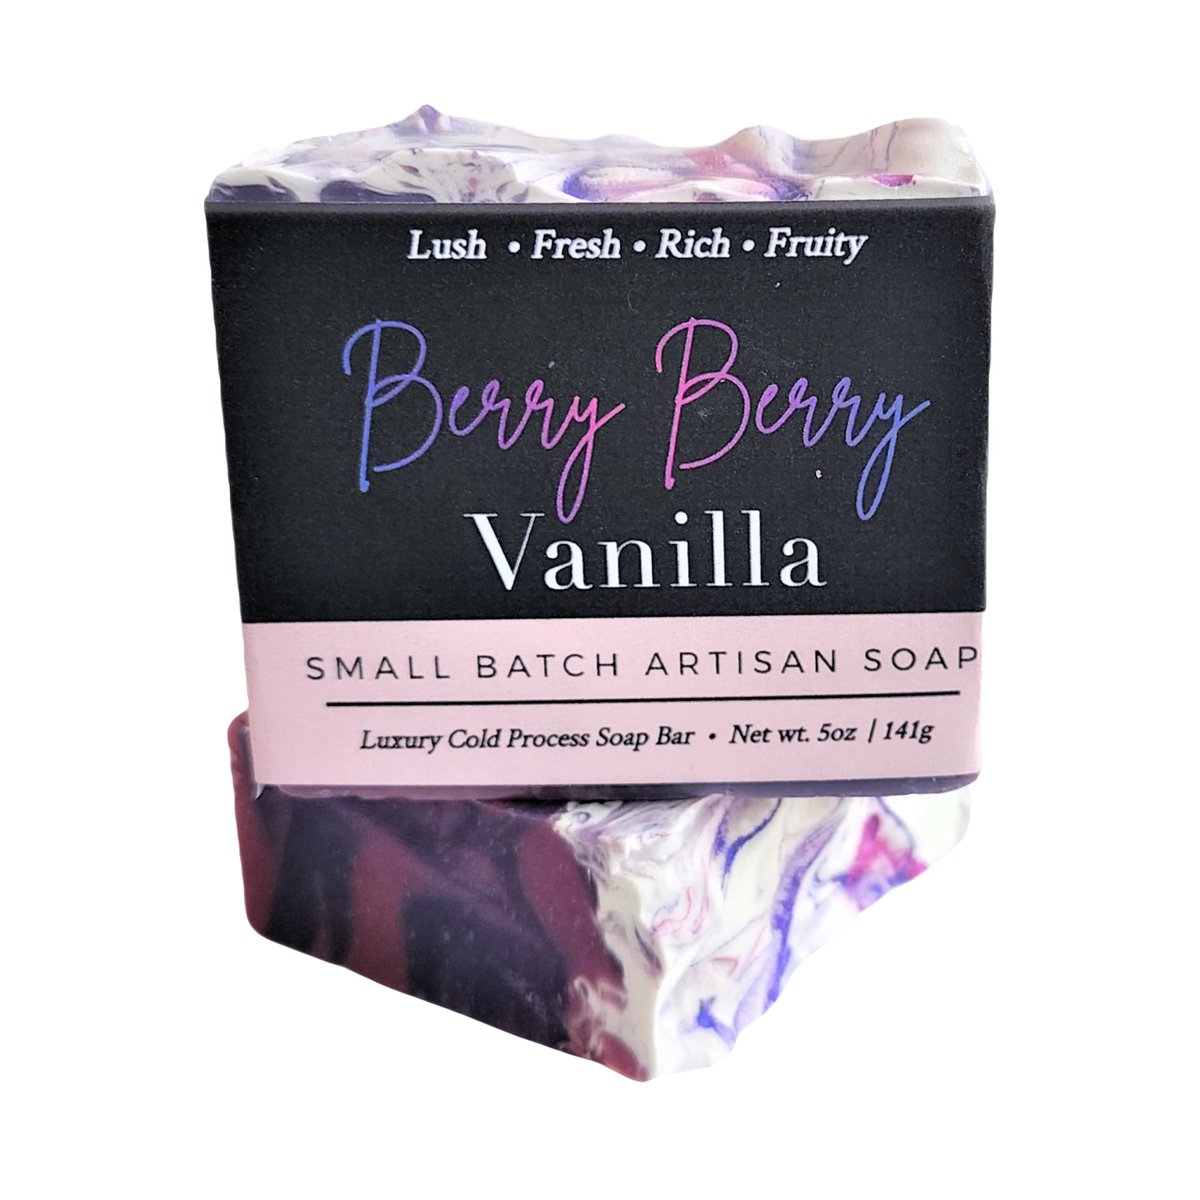 Berry Berry Vanilla Soap tuppu.net/6ebb11cd #DeShawnMarie #handmade #bathandbeauty #selfcare #Soap #Christmasgifts #handmadesoap #vegan #womanowned #smallbusiness